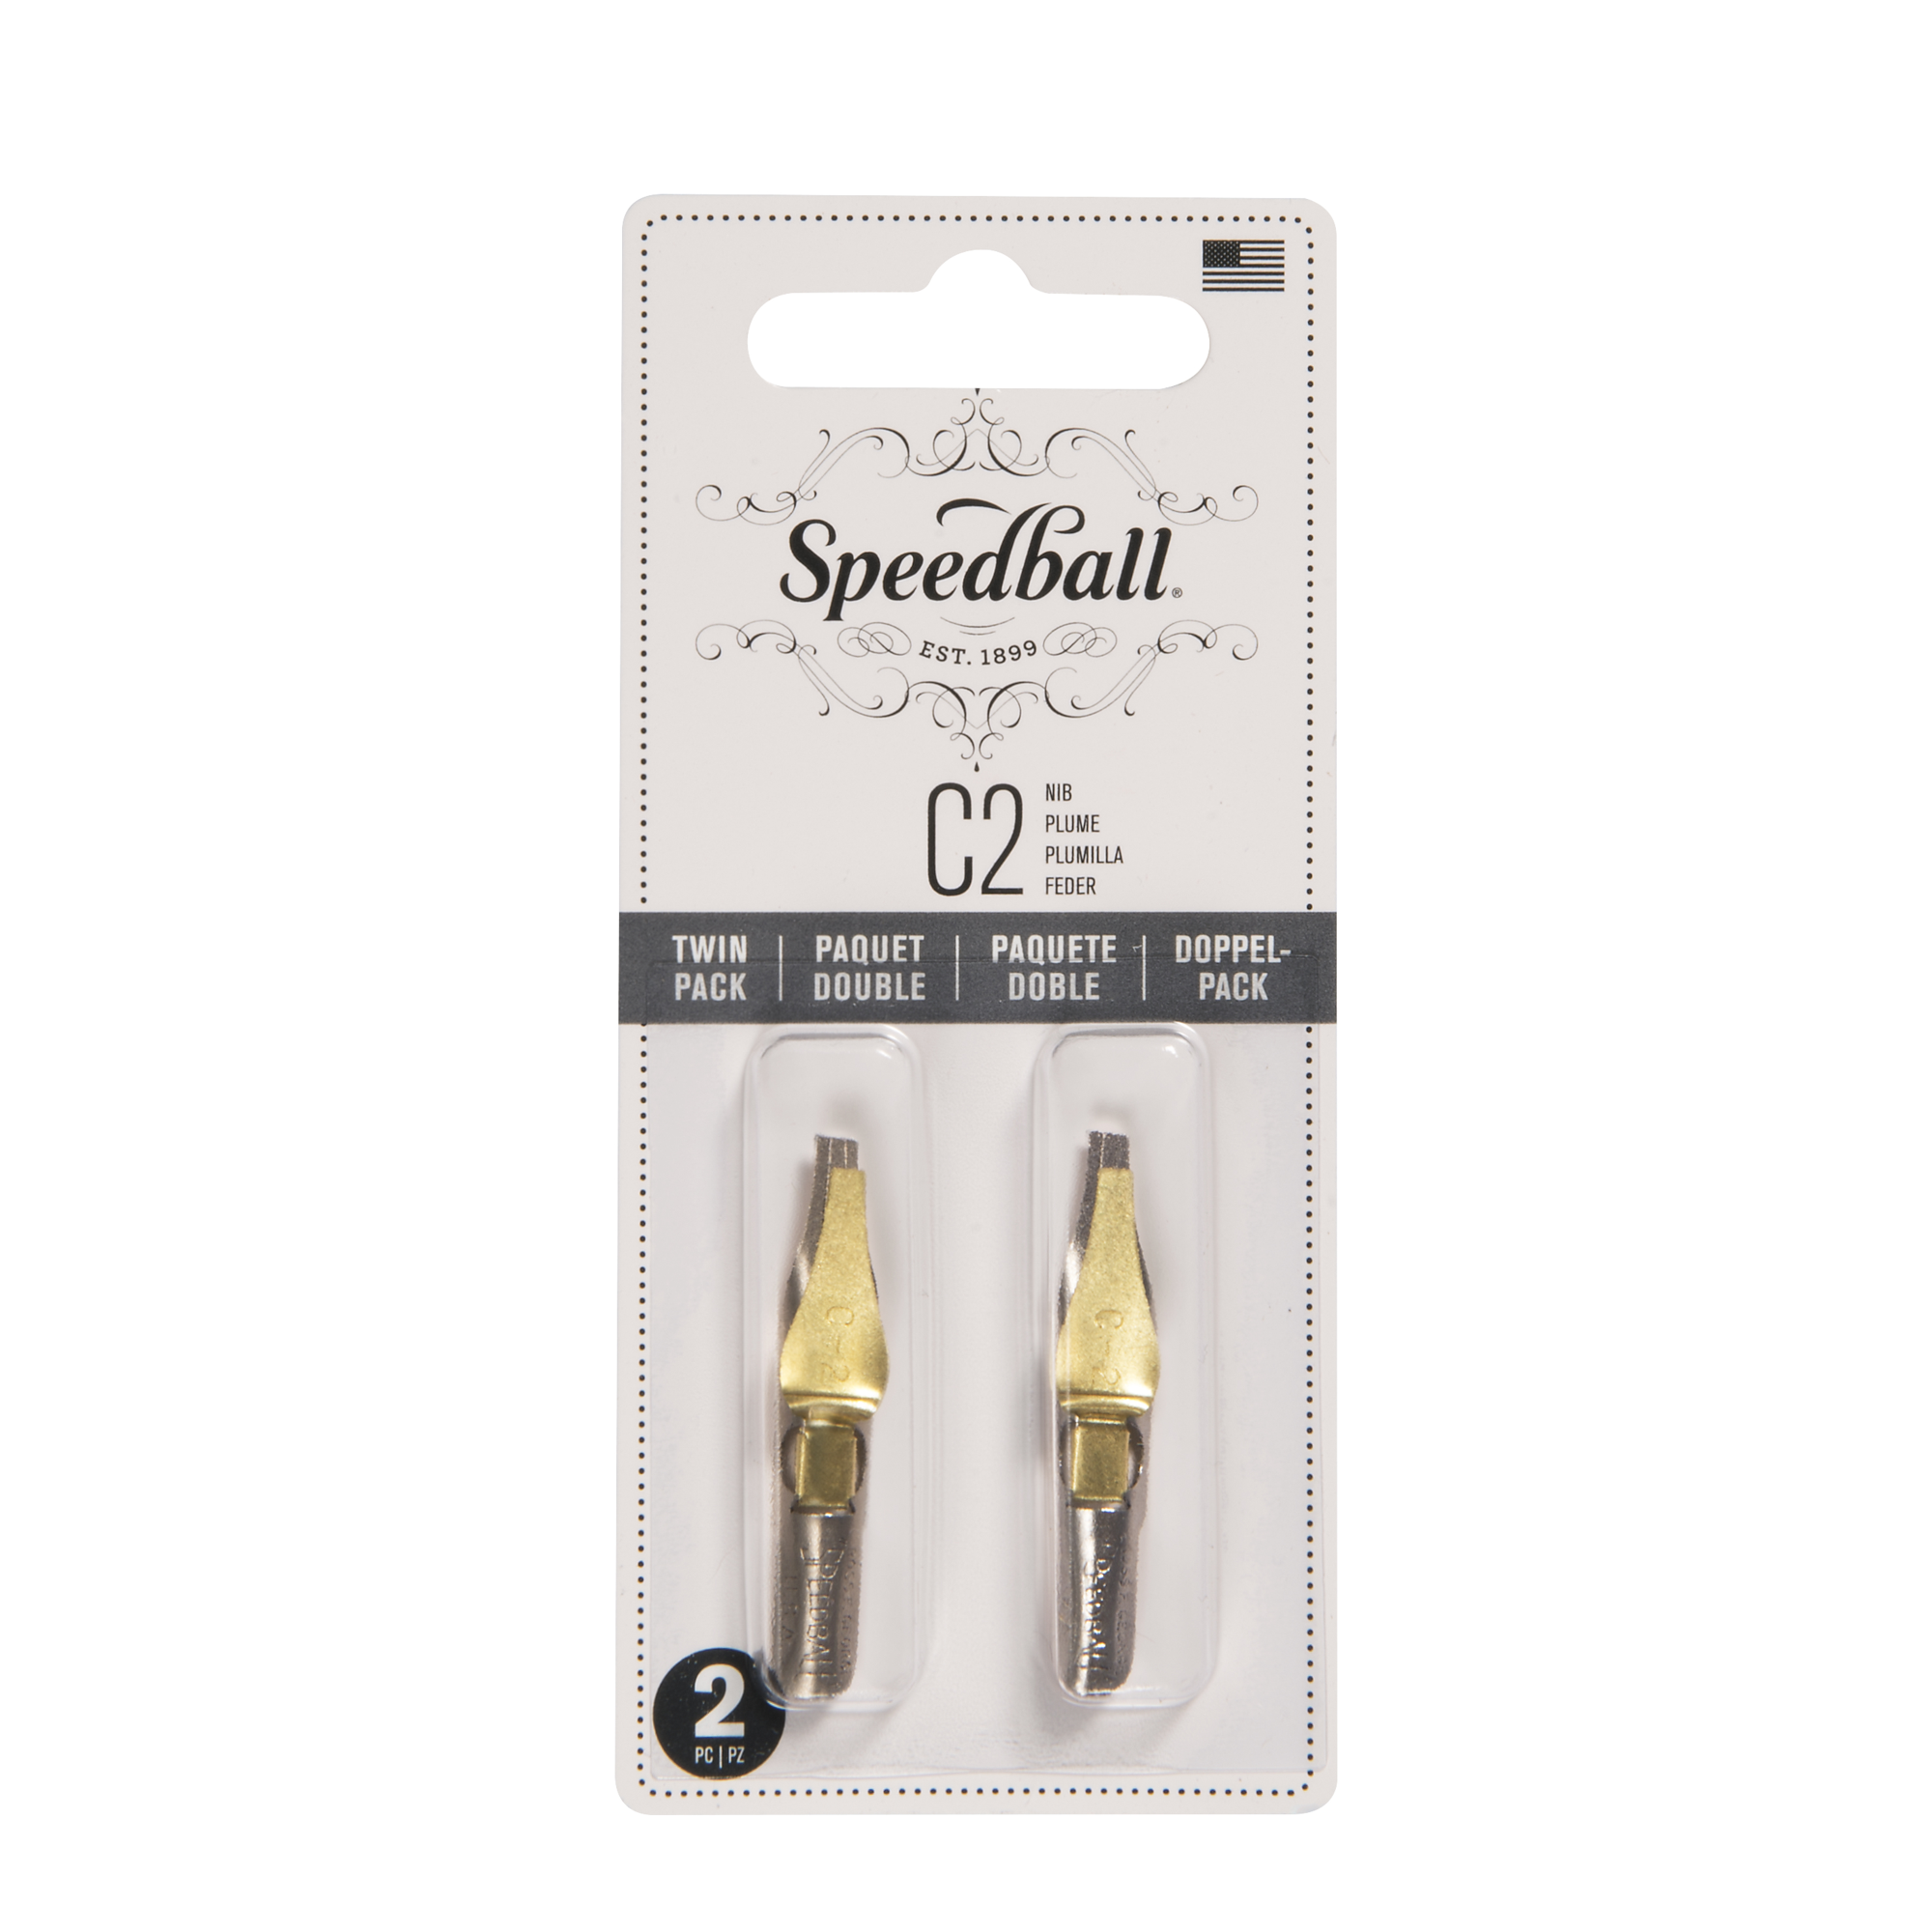 Speedball Signature Series Pen & Ink Set